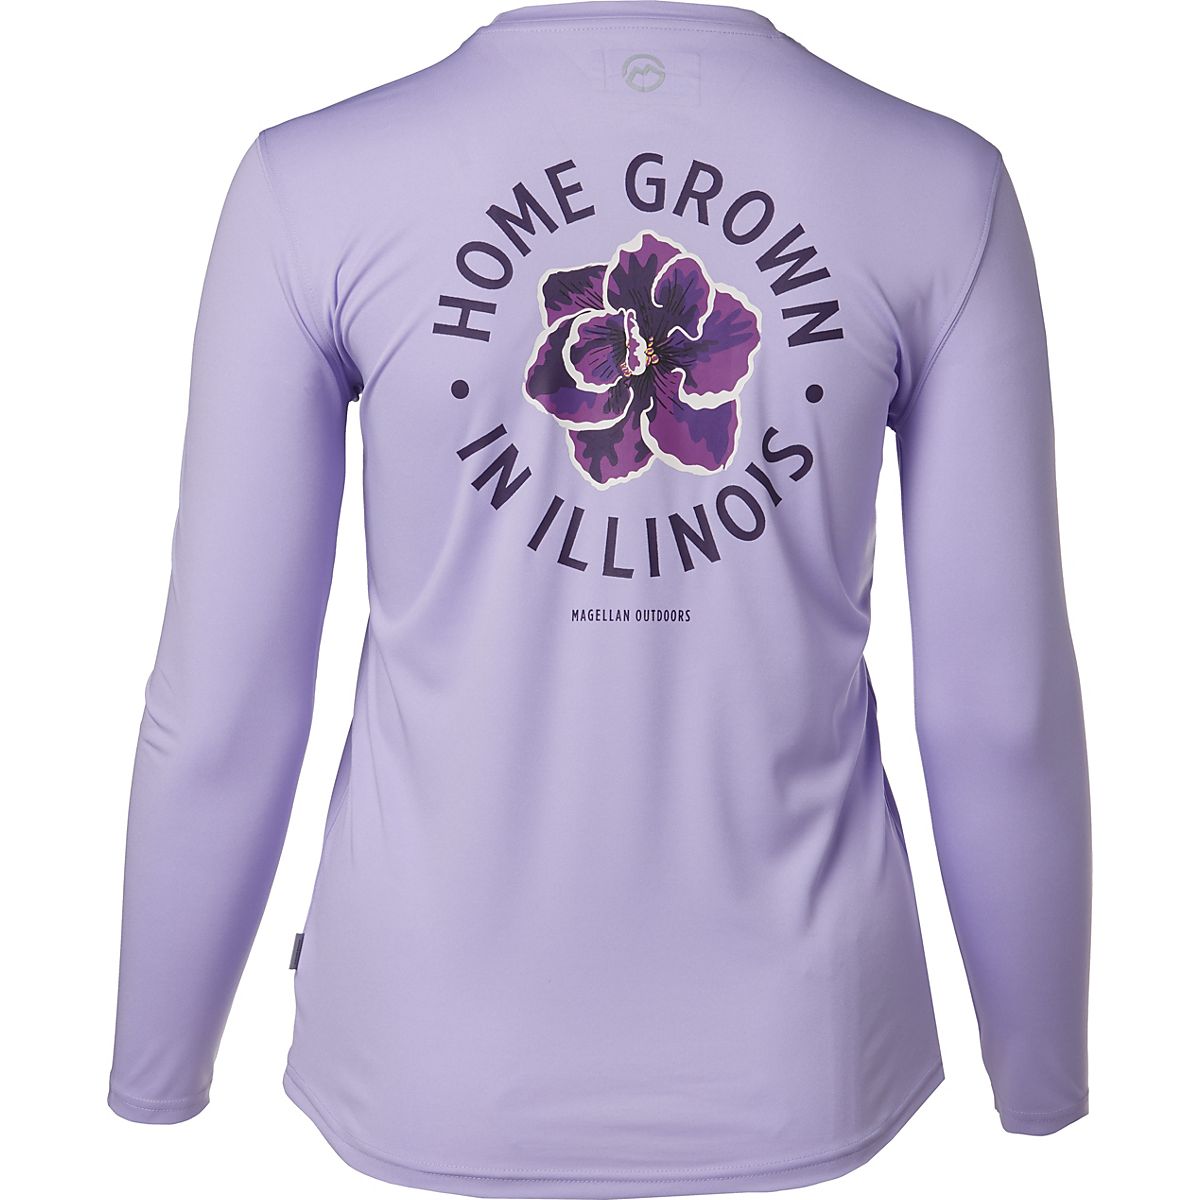 Magellan Women's Local State GFX Illinois Long Sleeve T-shirt